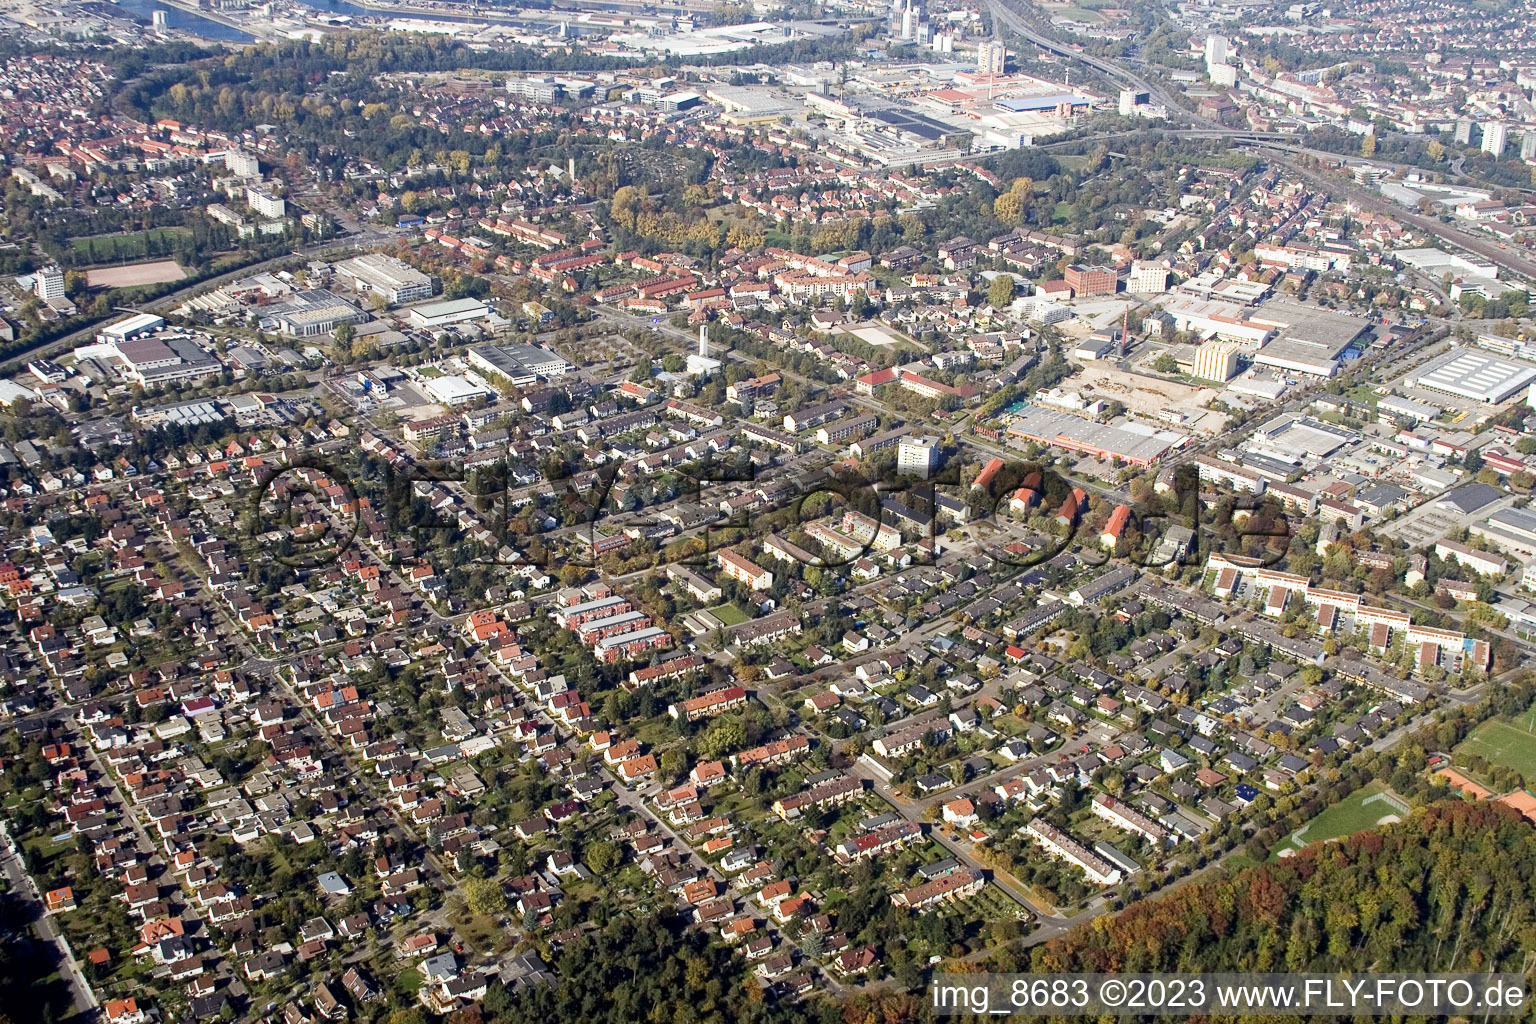 Aerial view of District Grünwinkel in Karlsruhe in the state Baden-Wuerttemberg, Germany